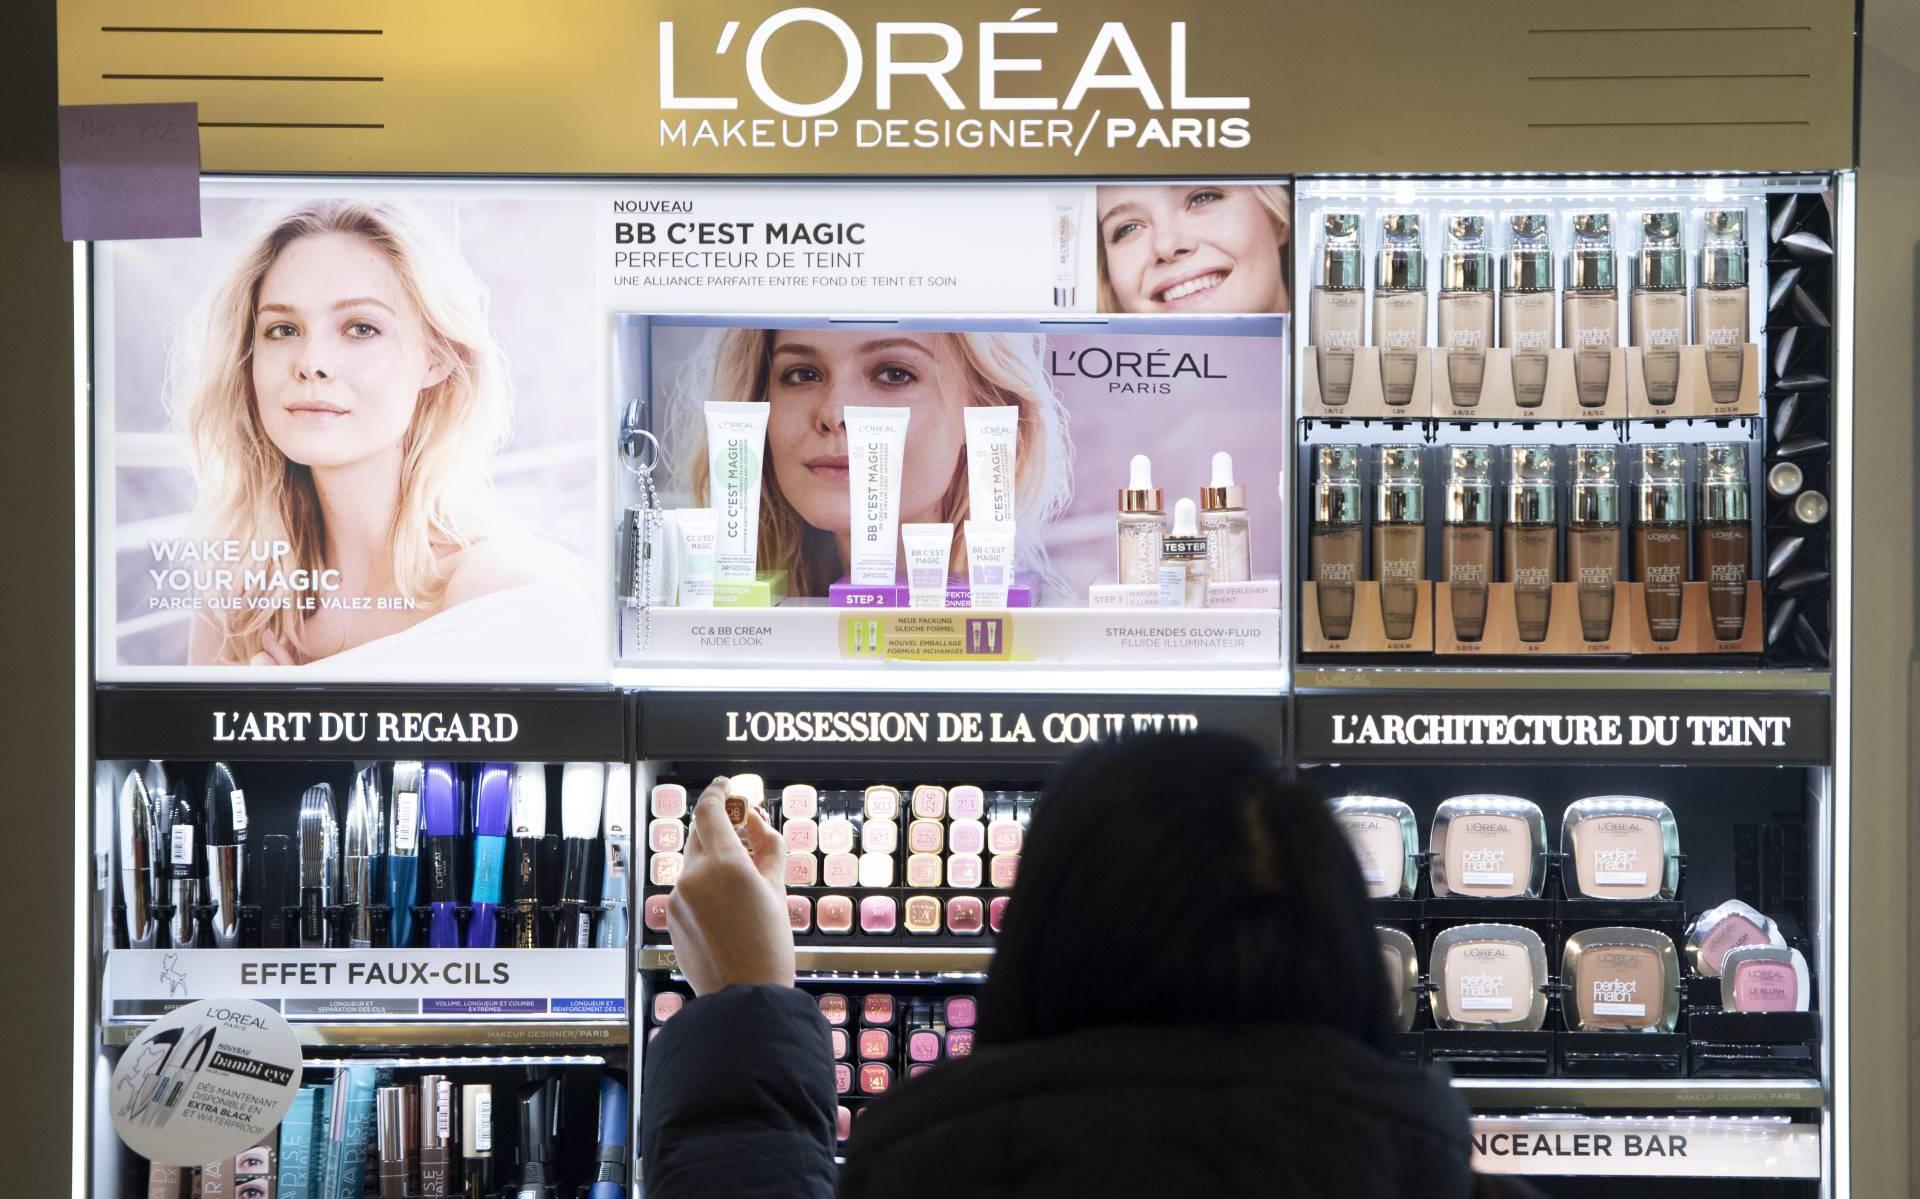 L'Oréal profiteert van Chinese vraag naar make-up